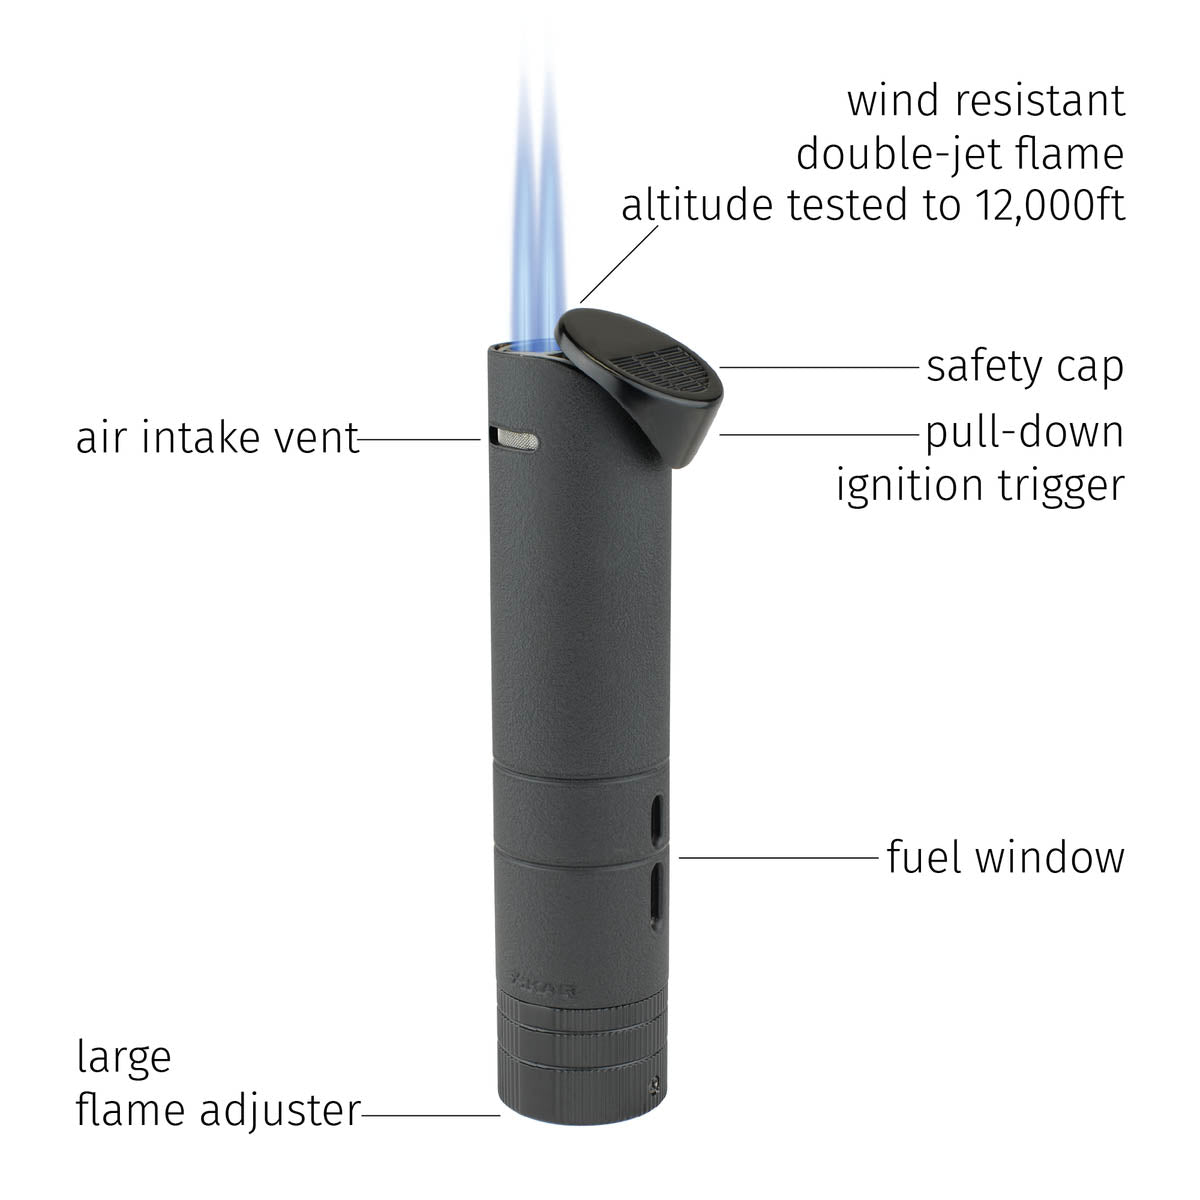 Turrim Tall Double-Jet Torch Lighter - Specs